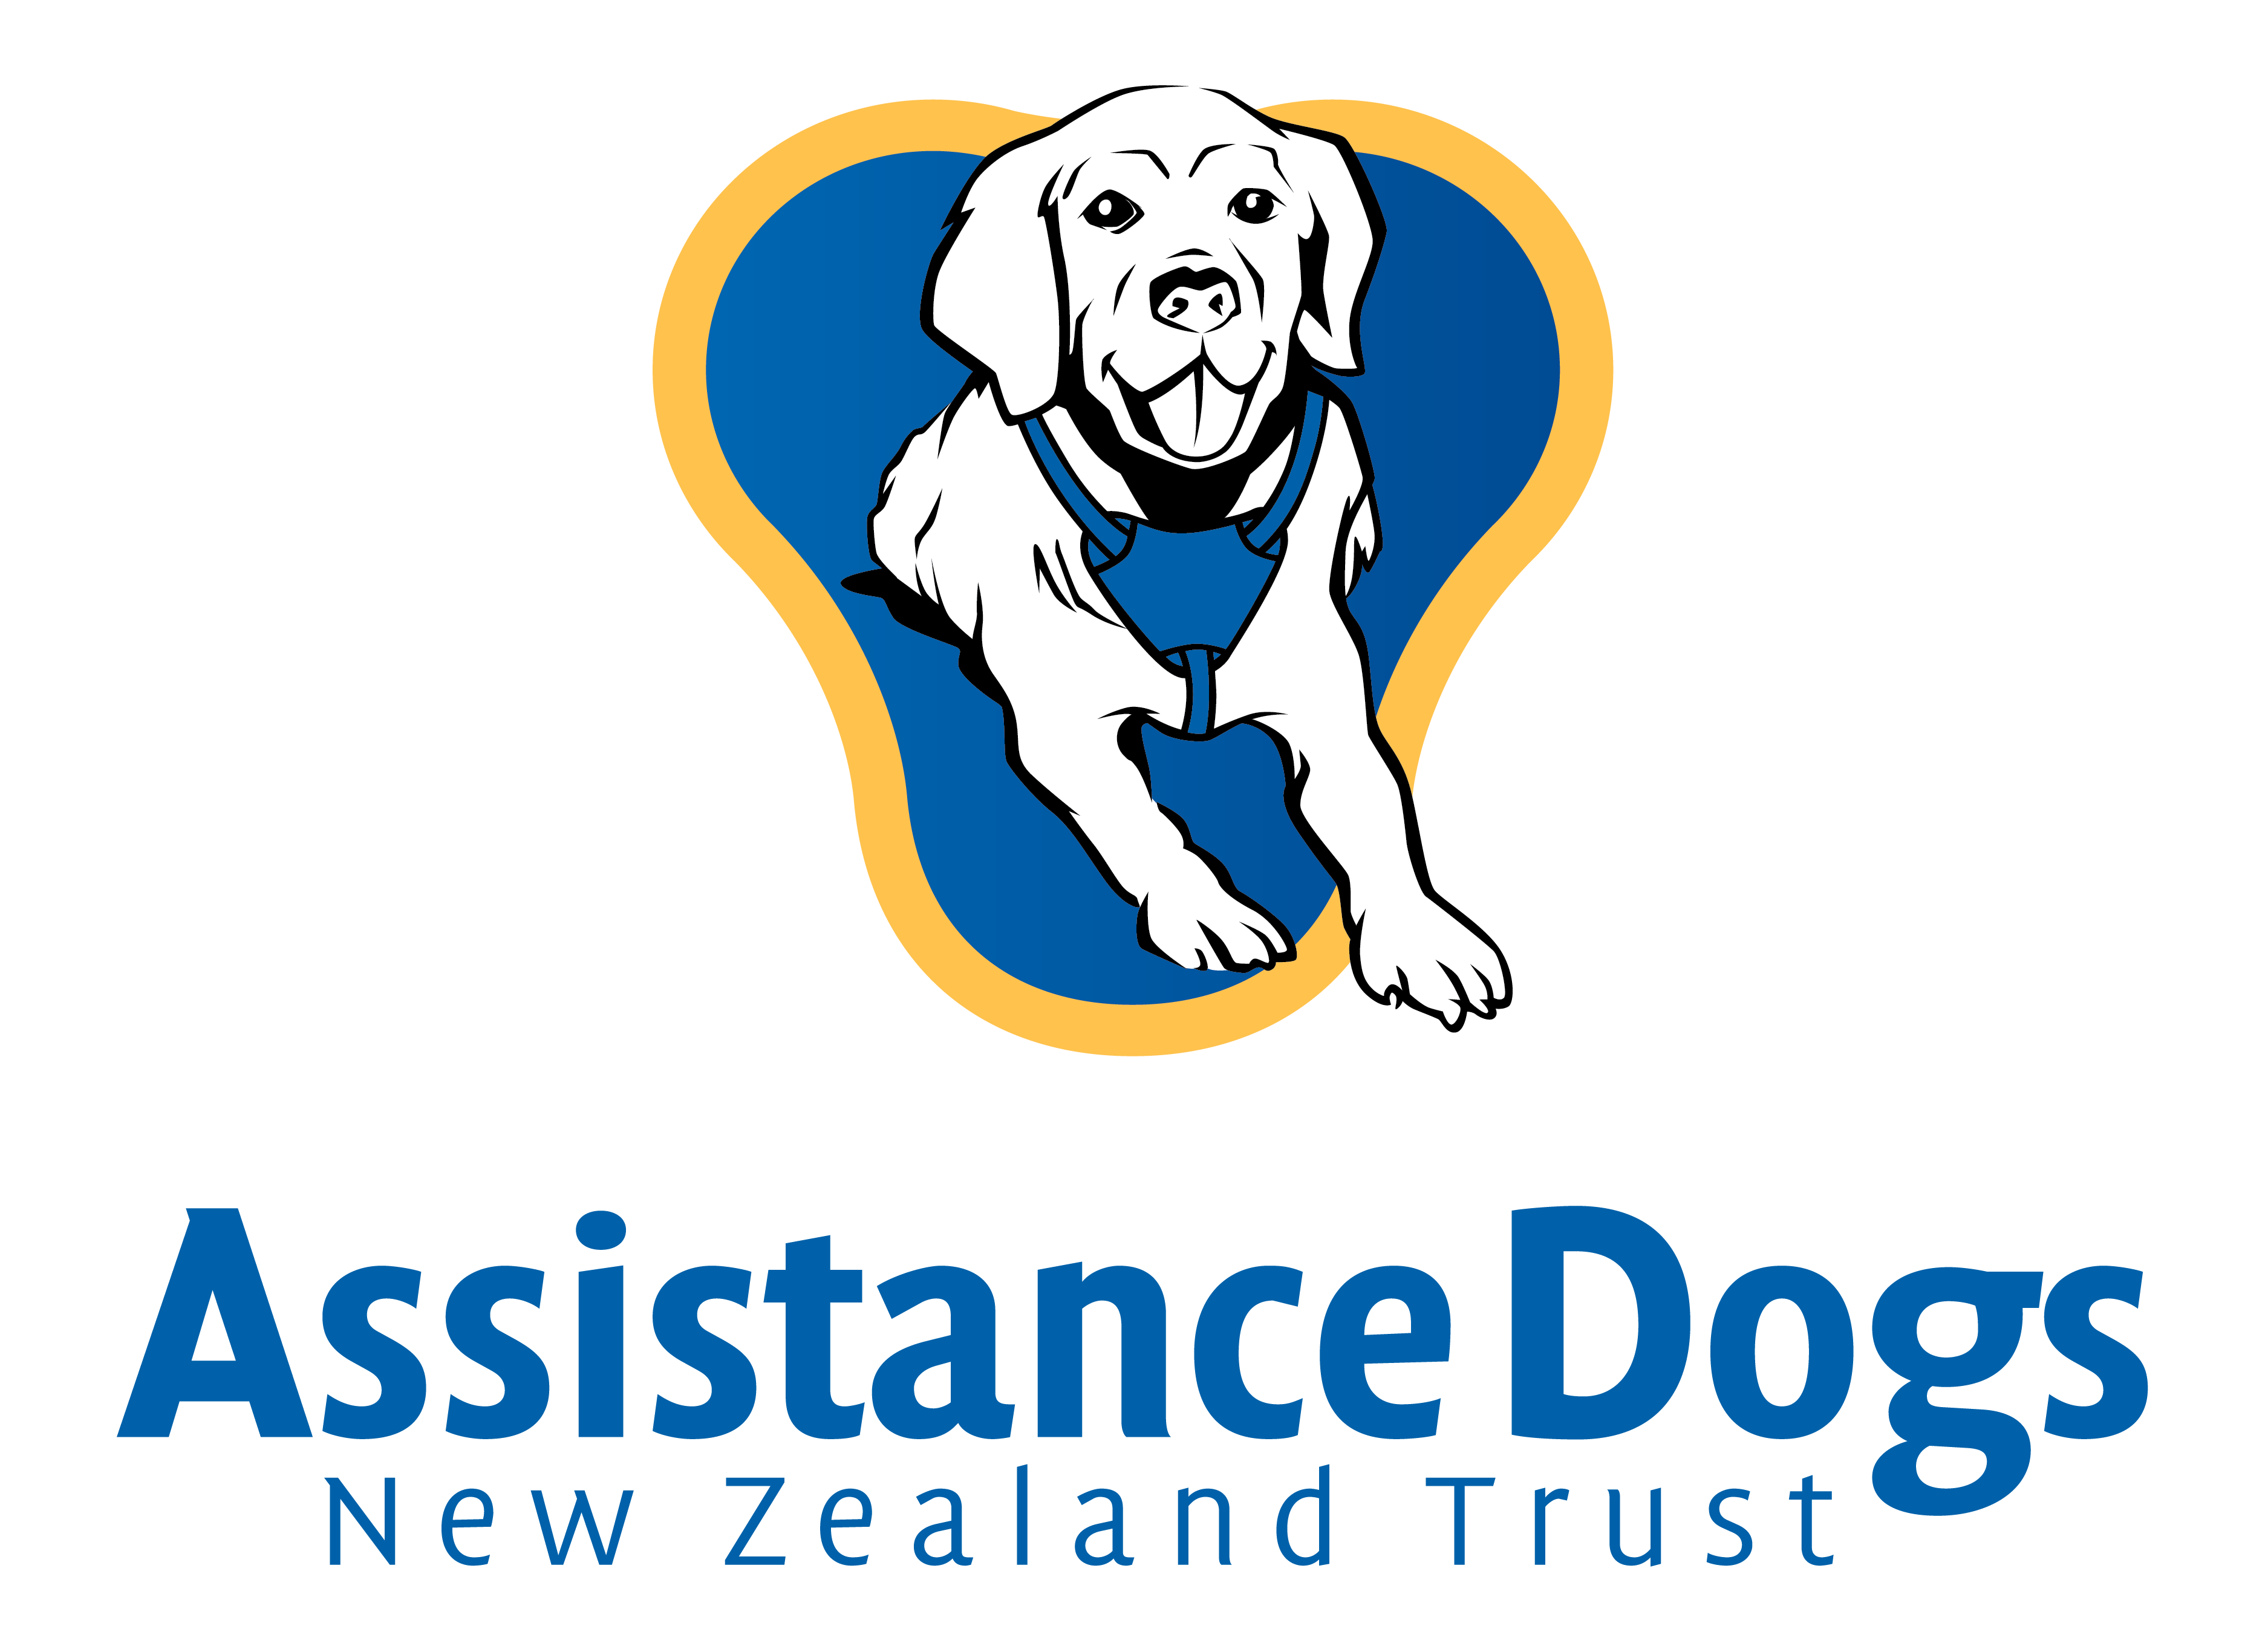 Assistance Dogs New Zealand Trust logo